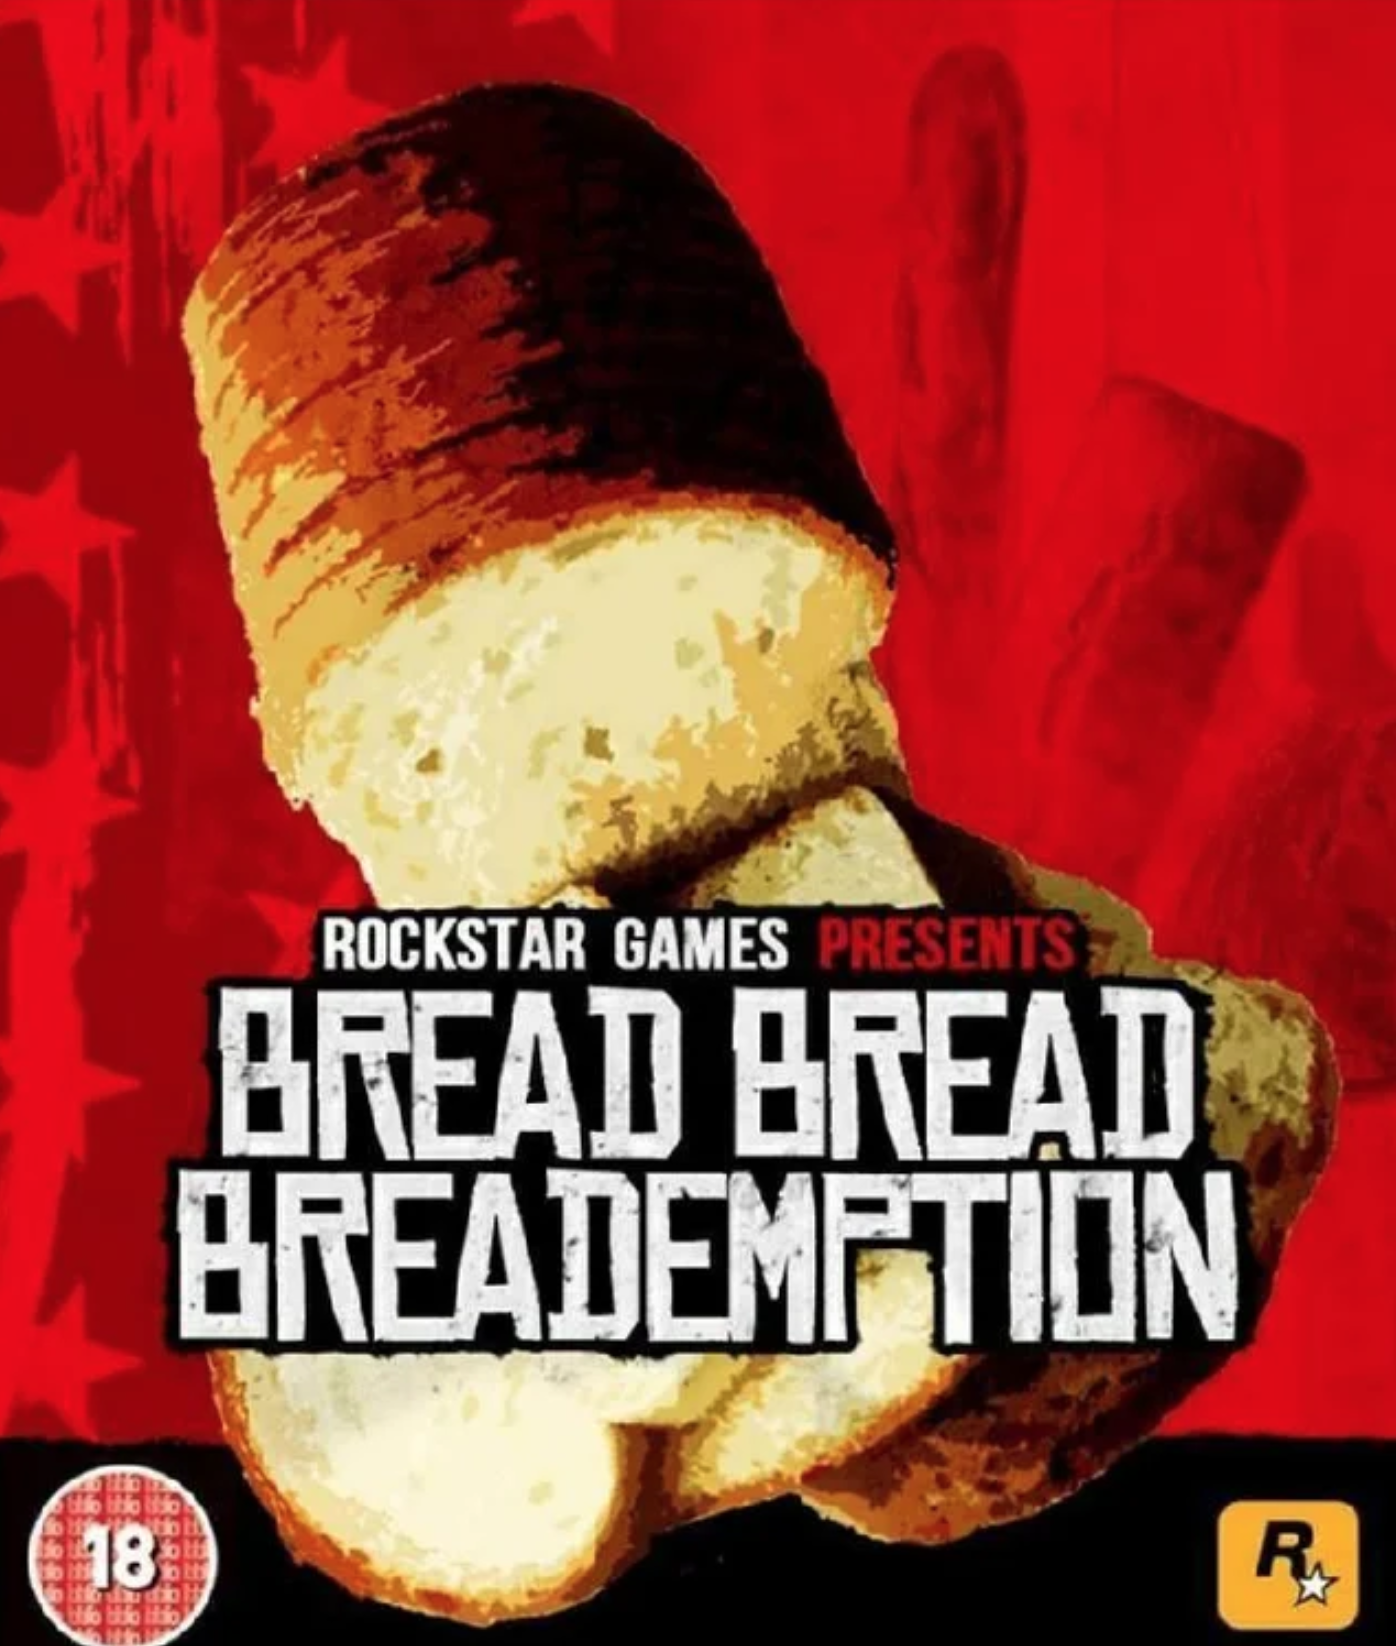 funny gaming memes - film - Rockstar Games Presents Bread Bread Breademption 18 R